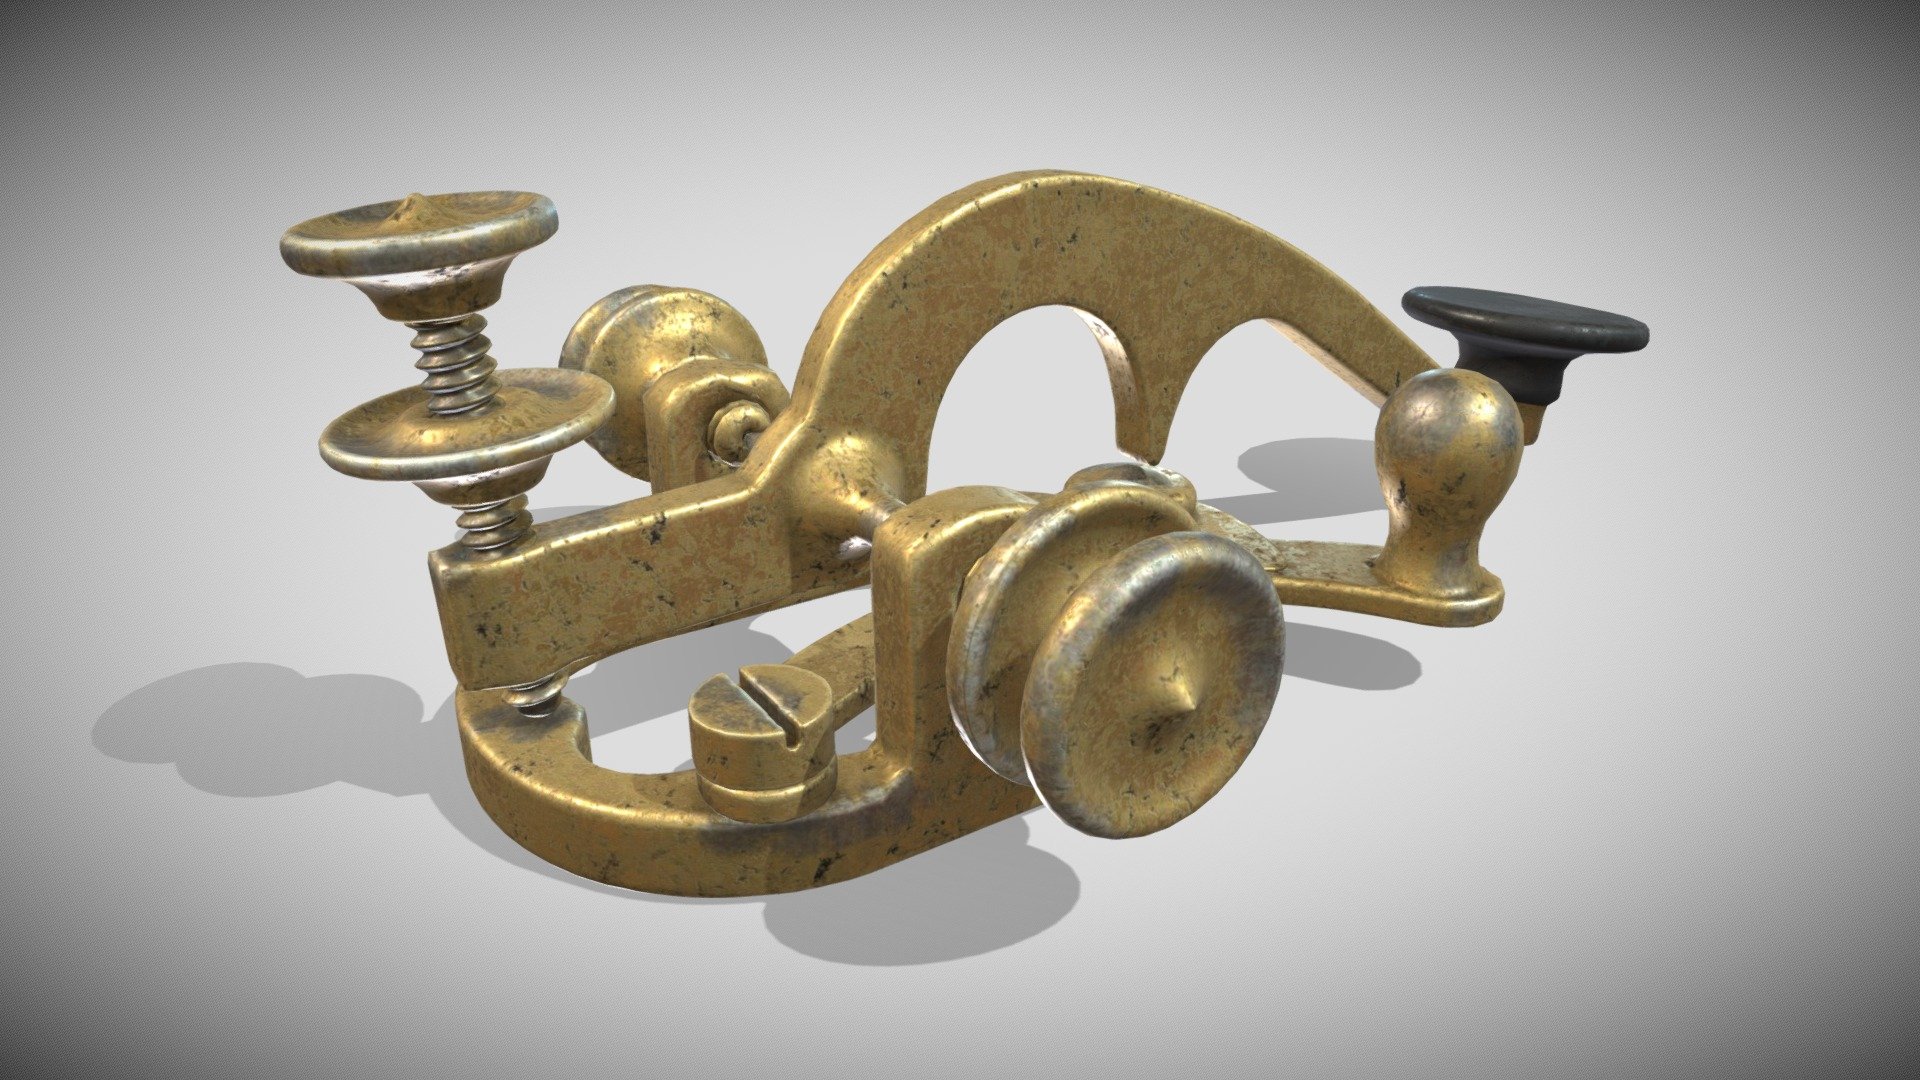 Old Telegraph Key Download Free 3d Model By Francesco Coldesina Topfrank2013 [bc18bf9